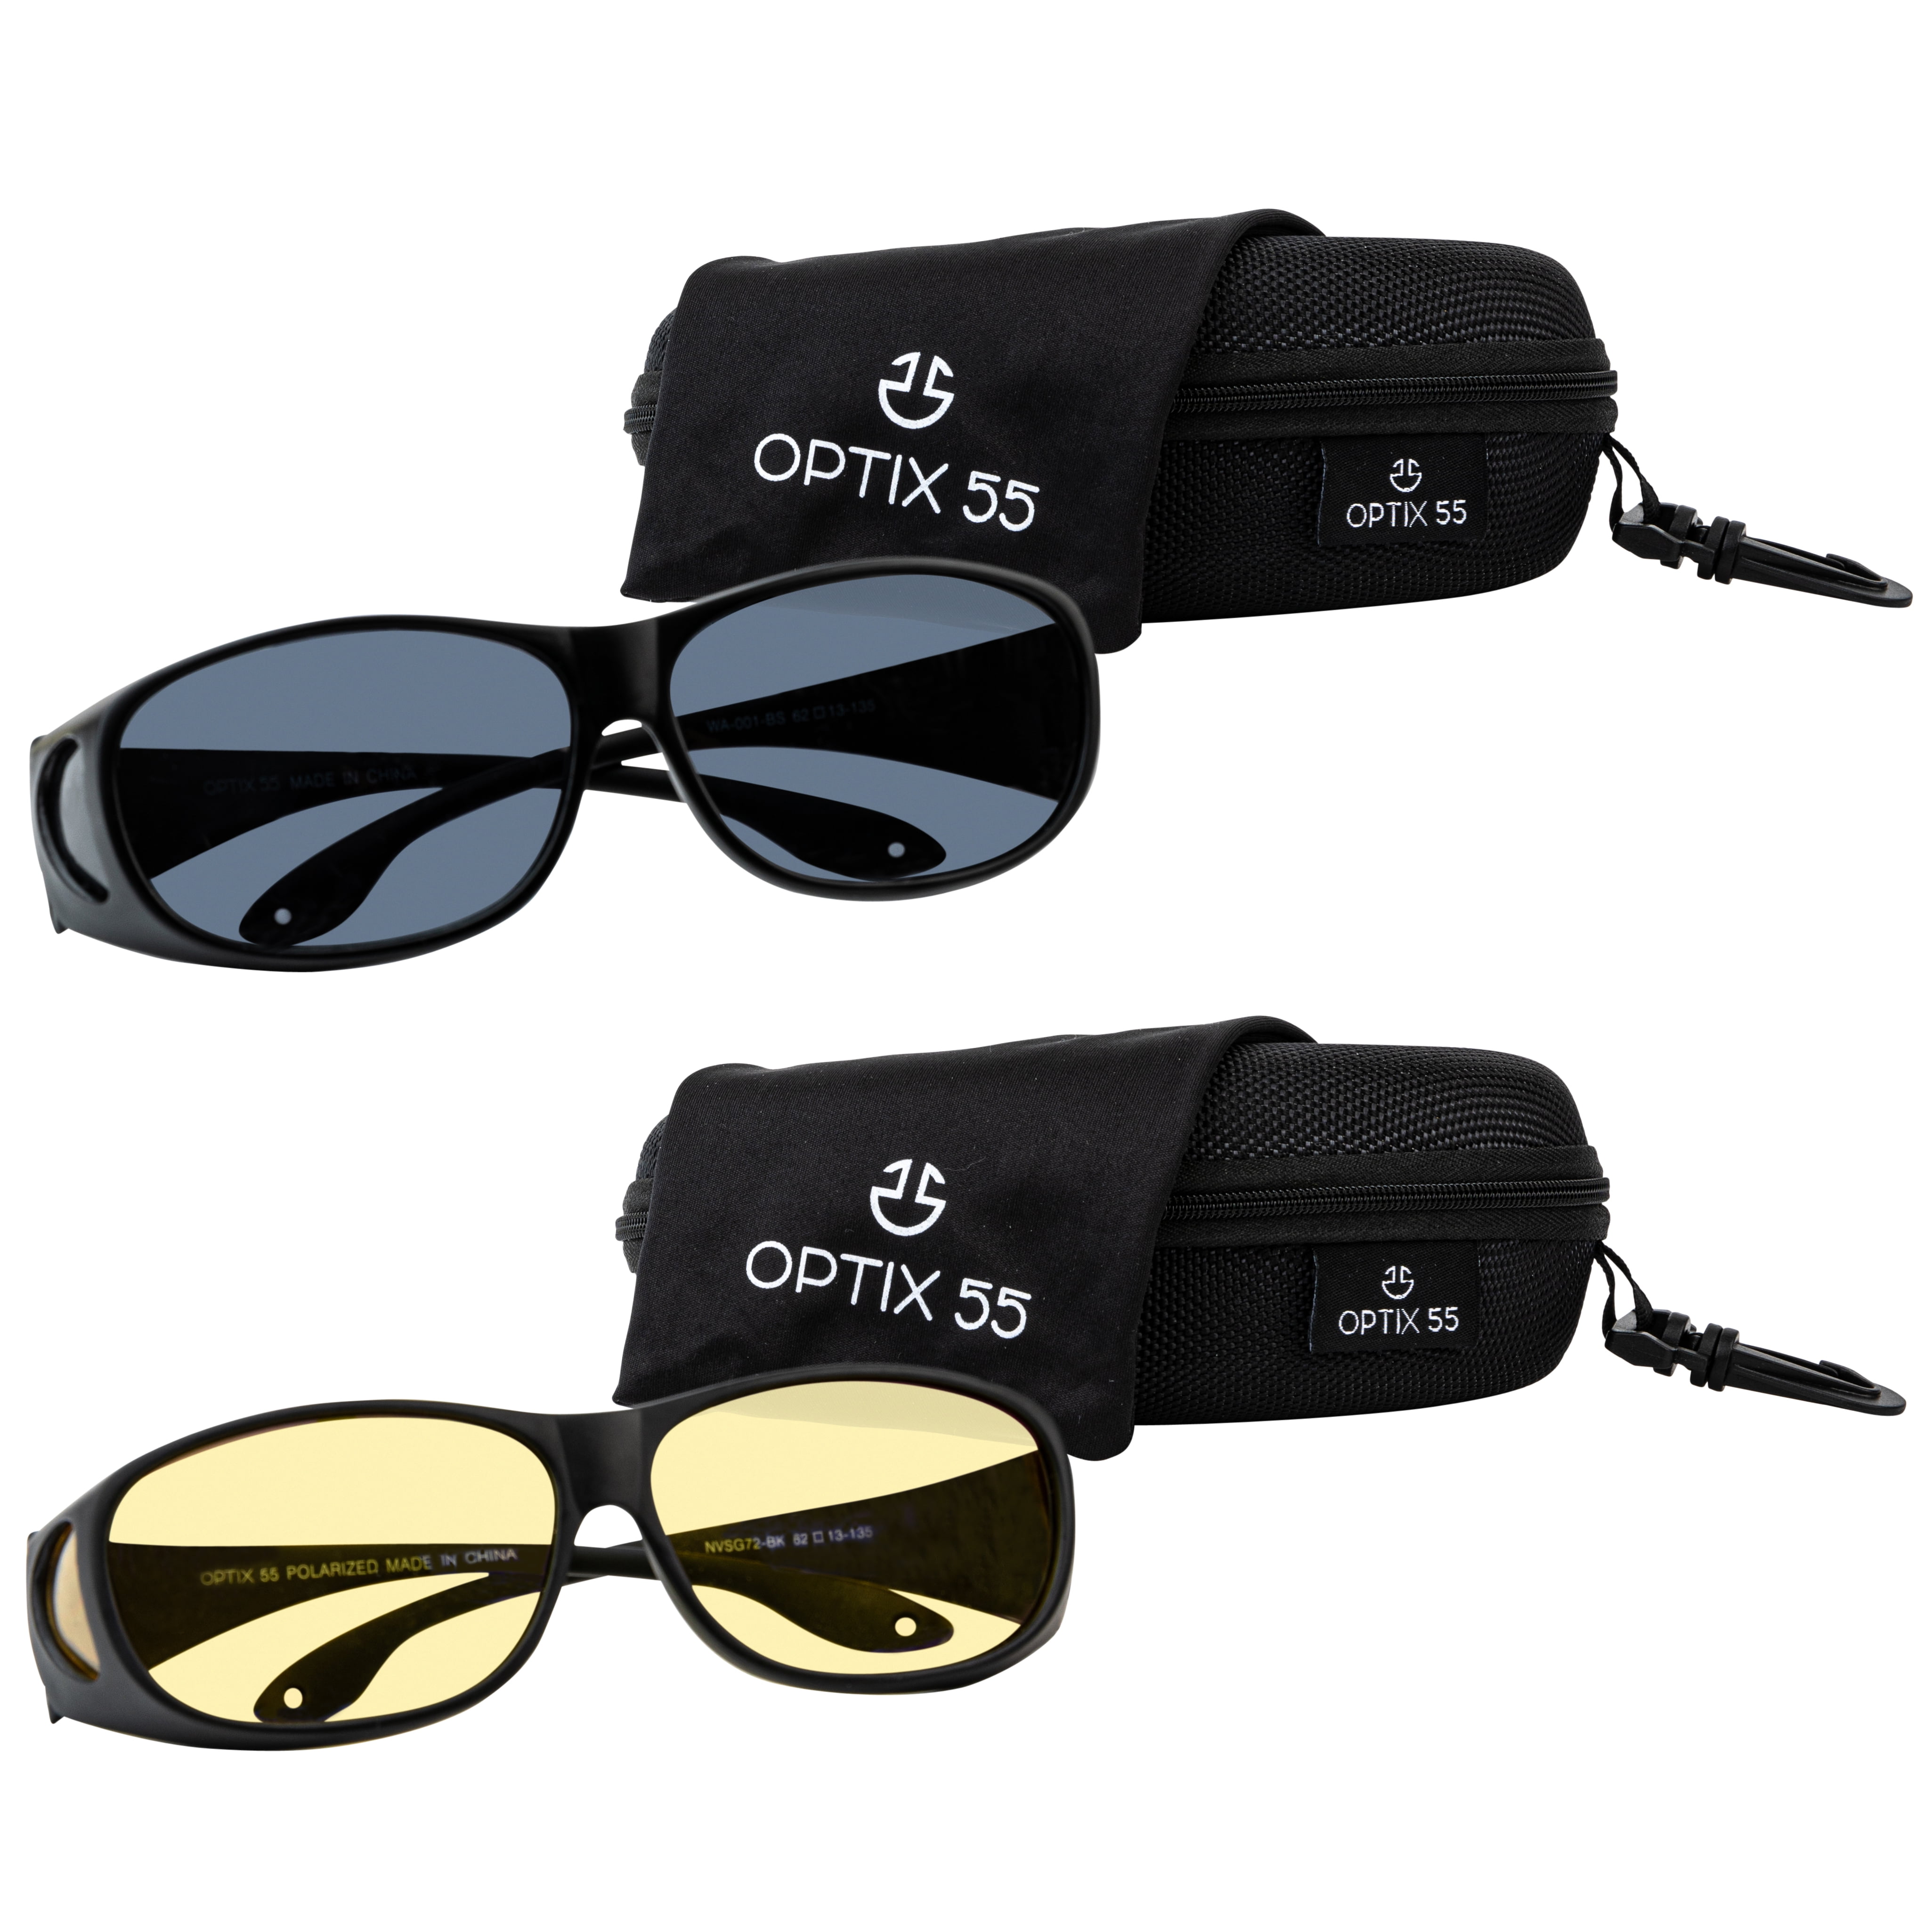 BOZEVON Wear Over Sunglasses For Men Women UV400 Fit Over Glasses Set of 2 PCS Sunglasses and Night Driving Glasses 